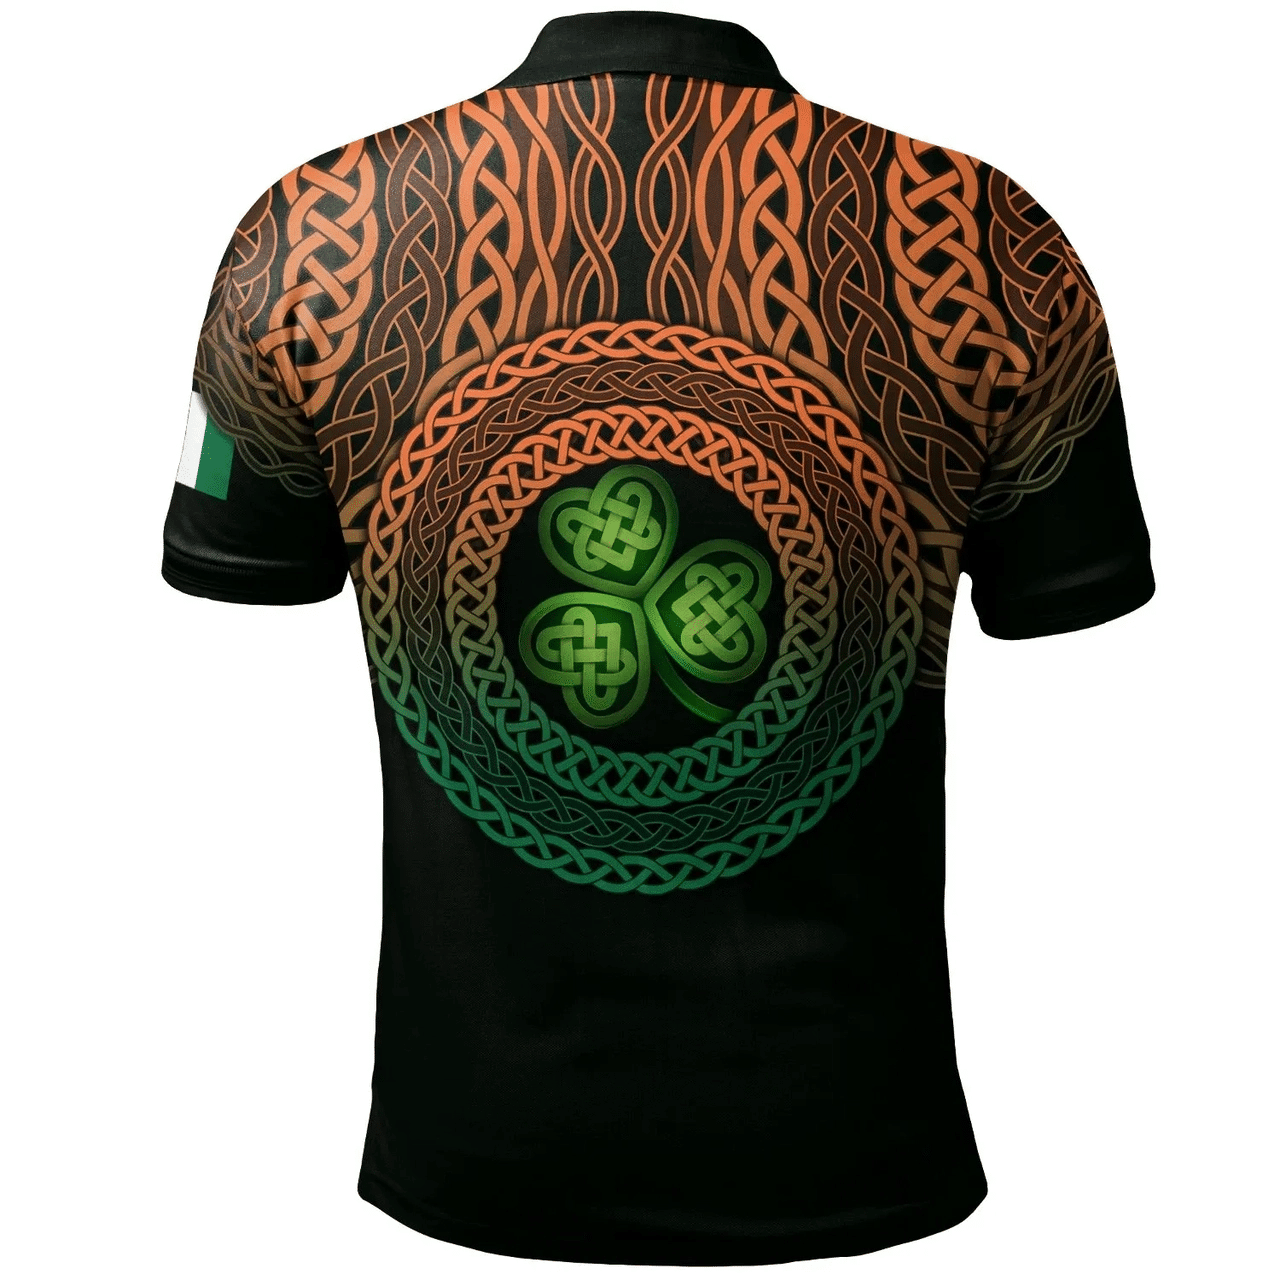 1stIreland Ireland Polo Shirt - McGrane or McGrann Irish Family Crest Polo Shirt - Celtic Pride A7 | 1stIreland.com